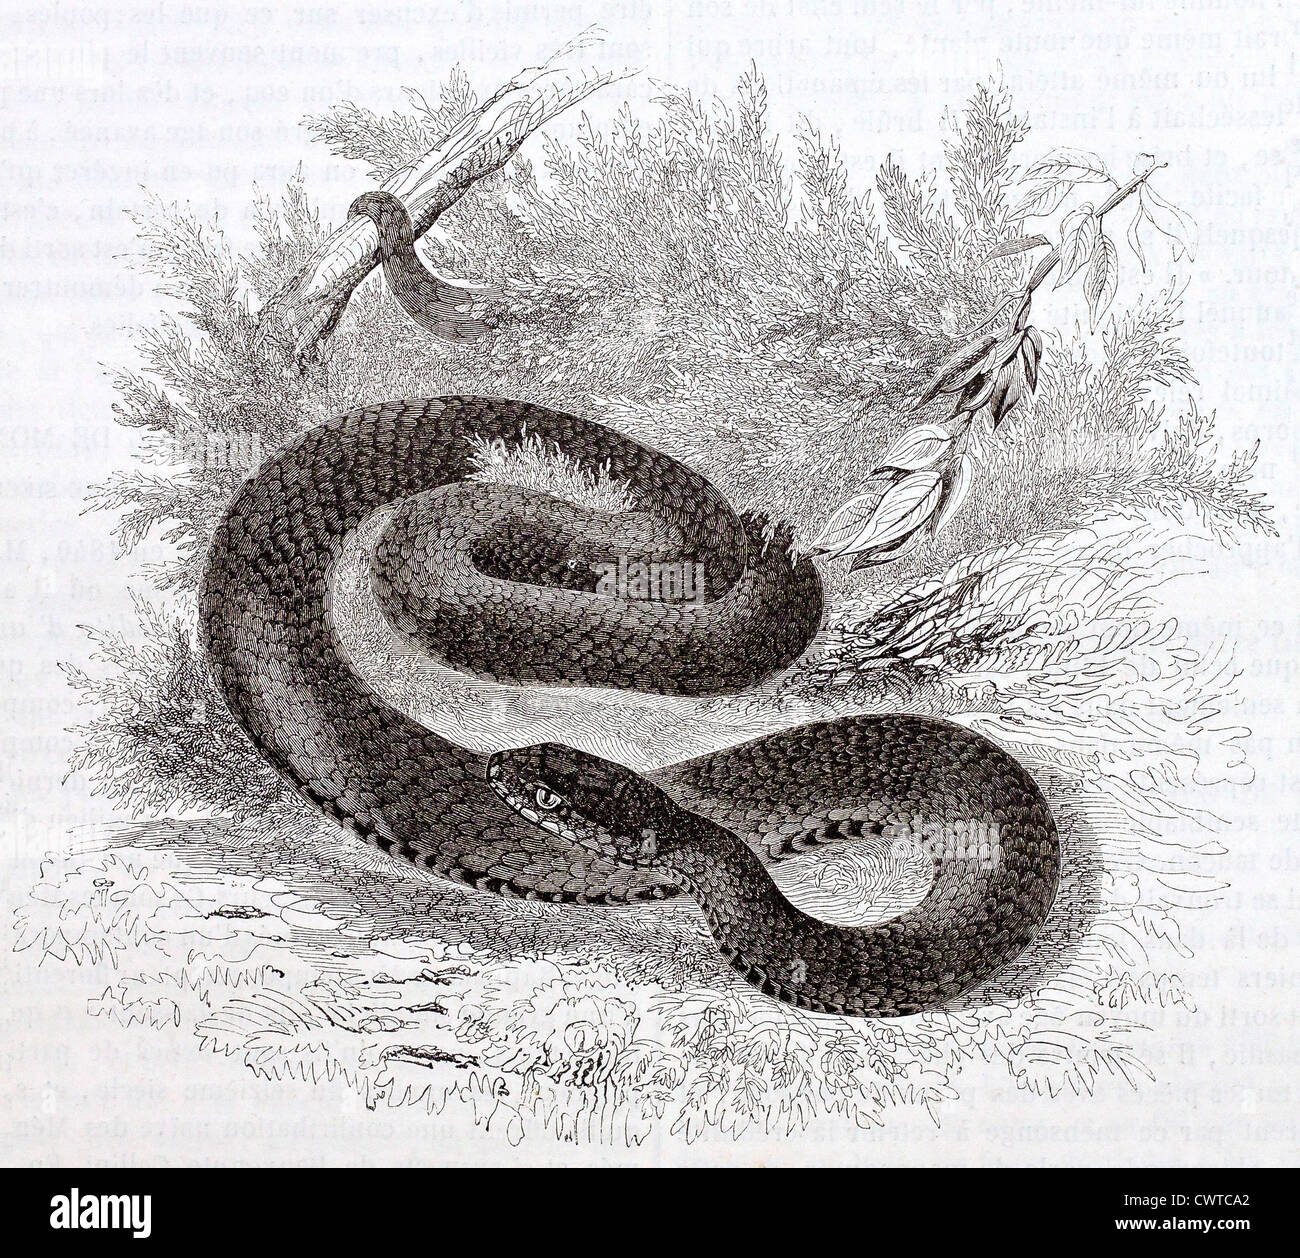 Venomous viper art hi-res stock photography and images - Alamy